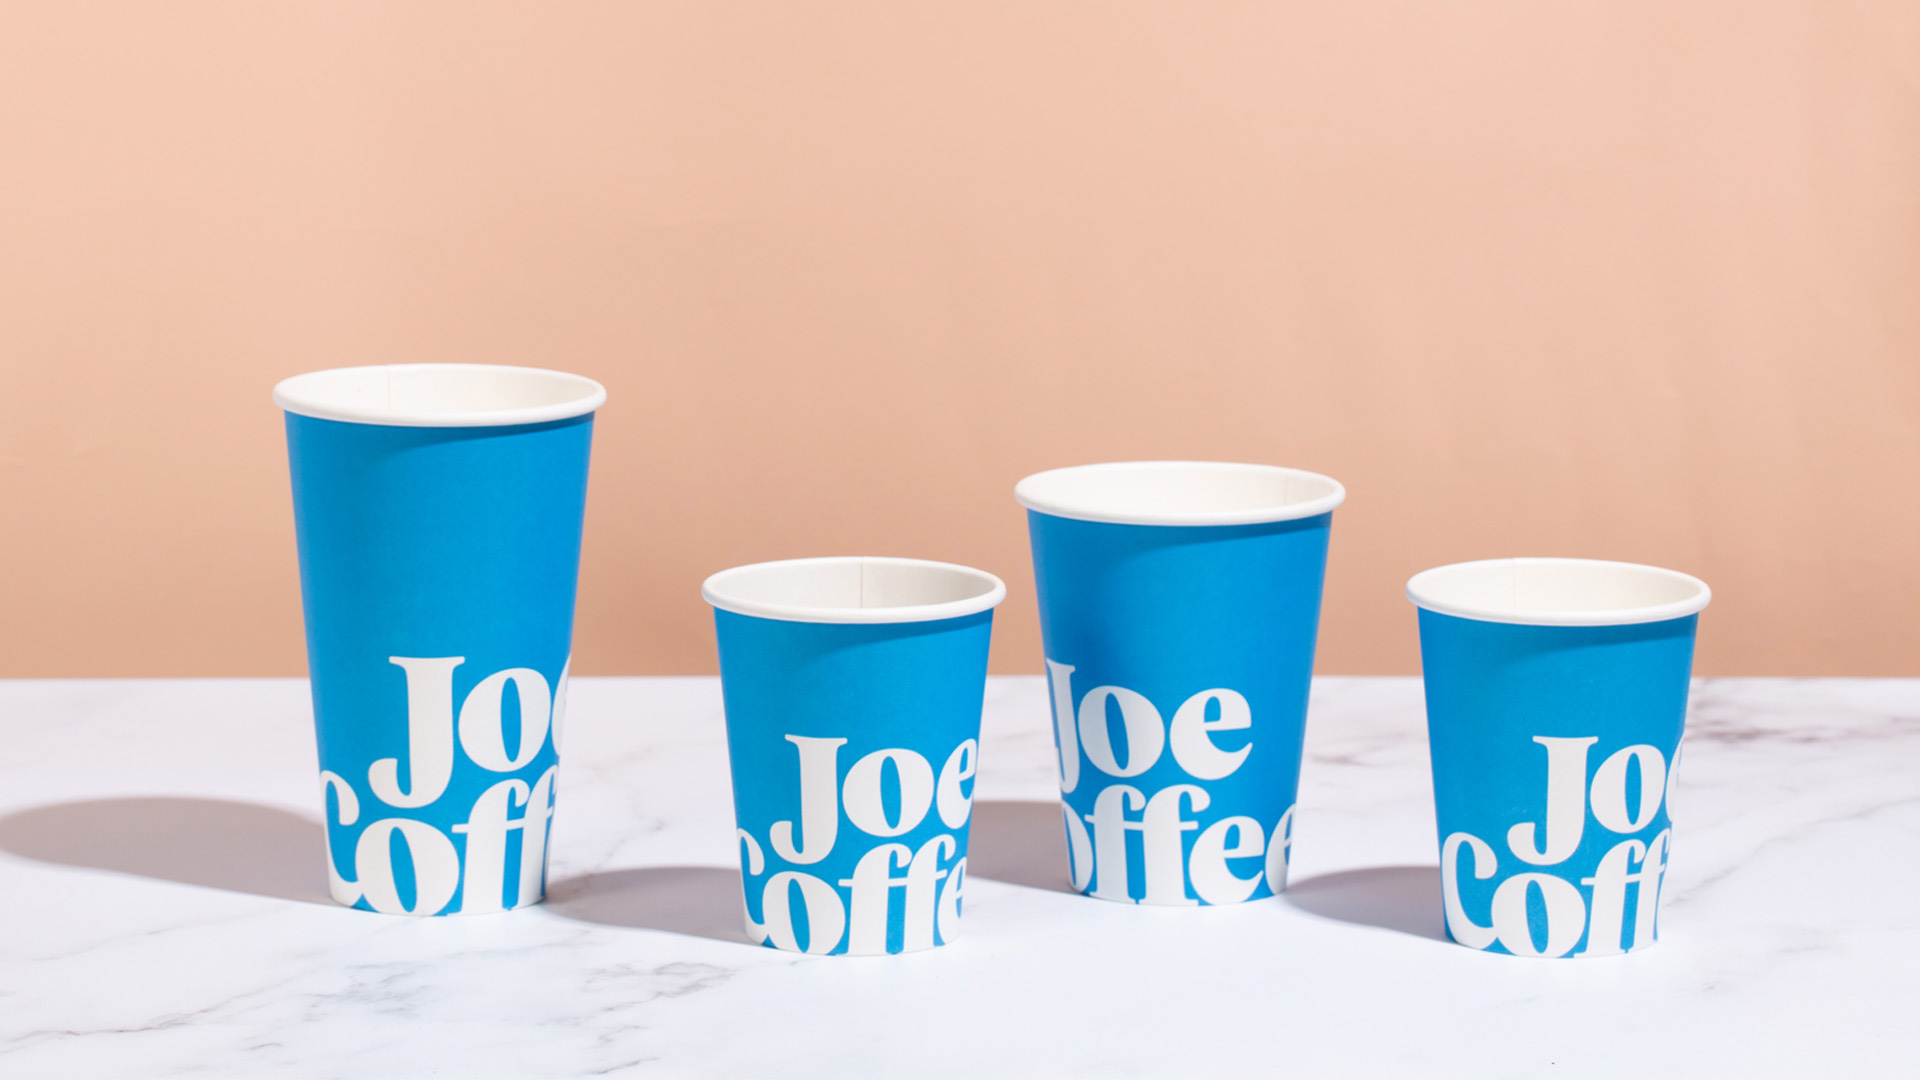 New Logo and Identity for Joe Coffee Company by Godfrey Dadich Partners